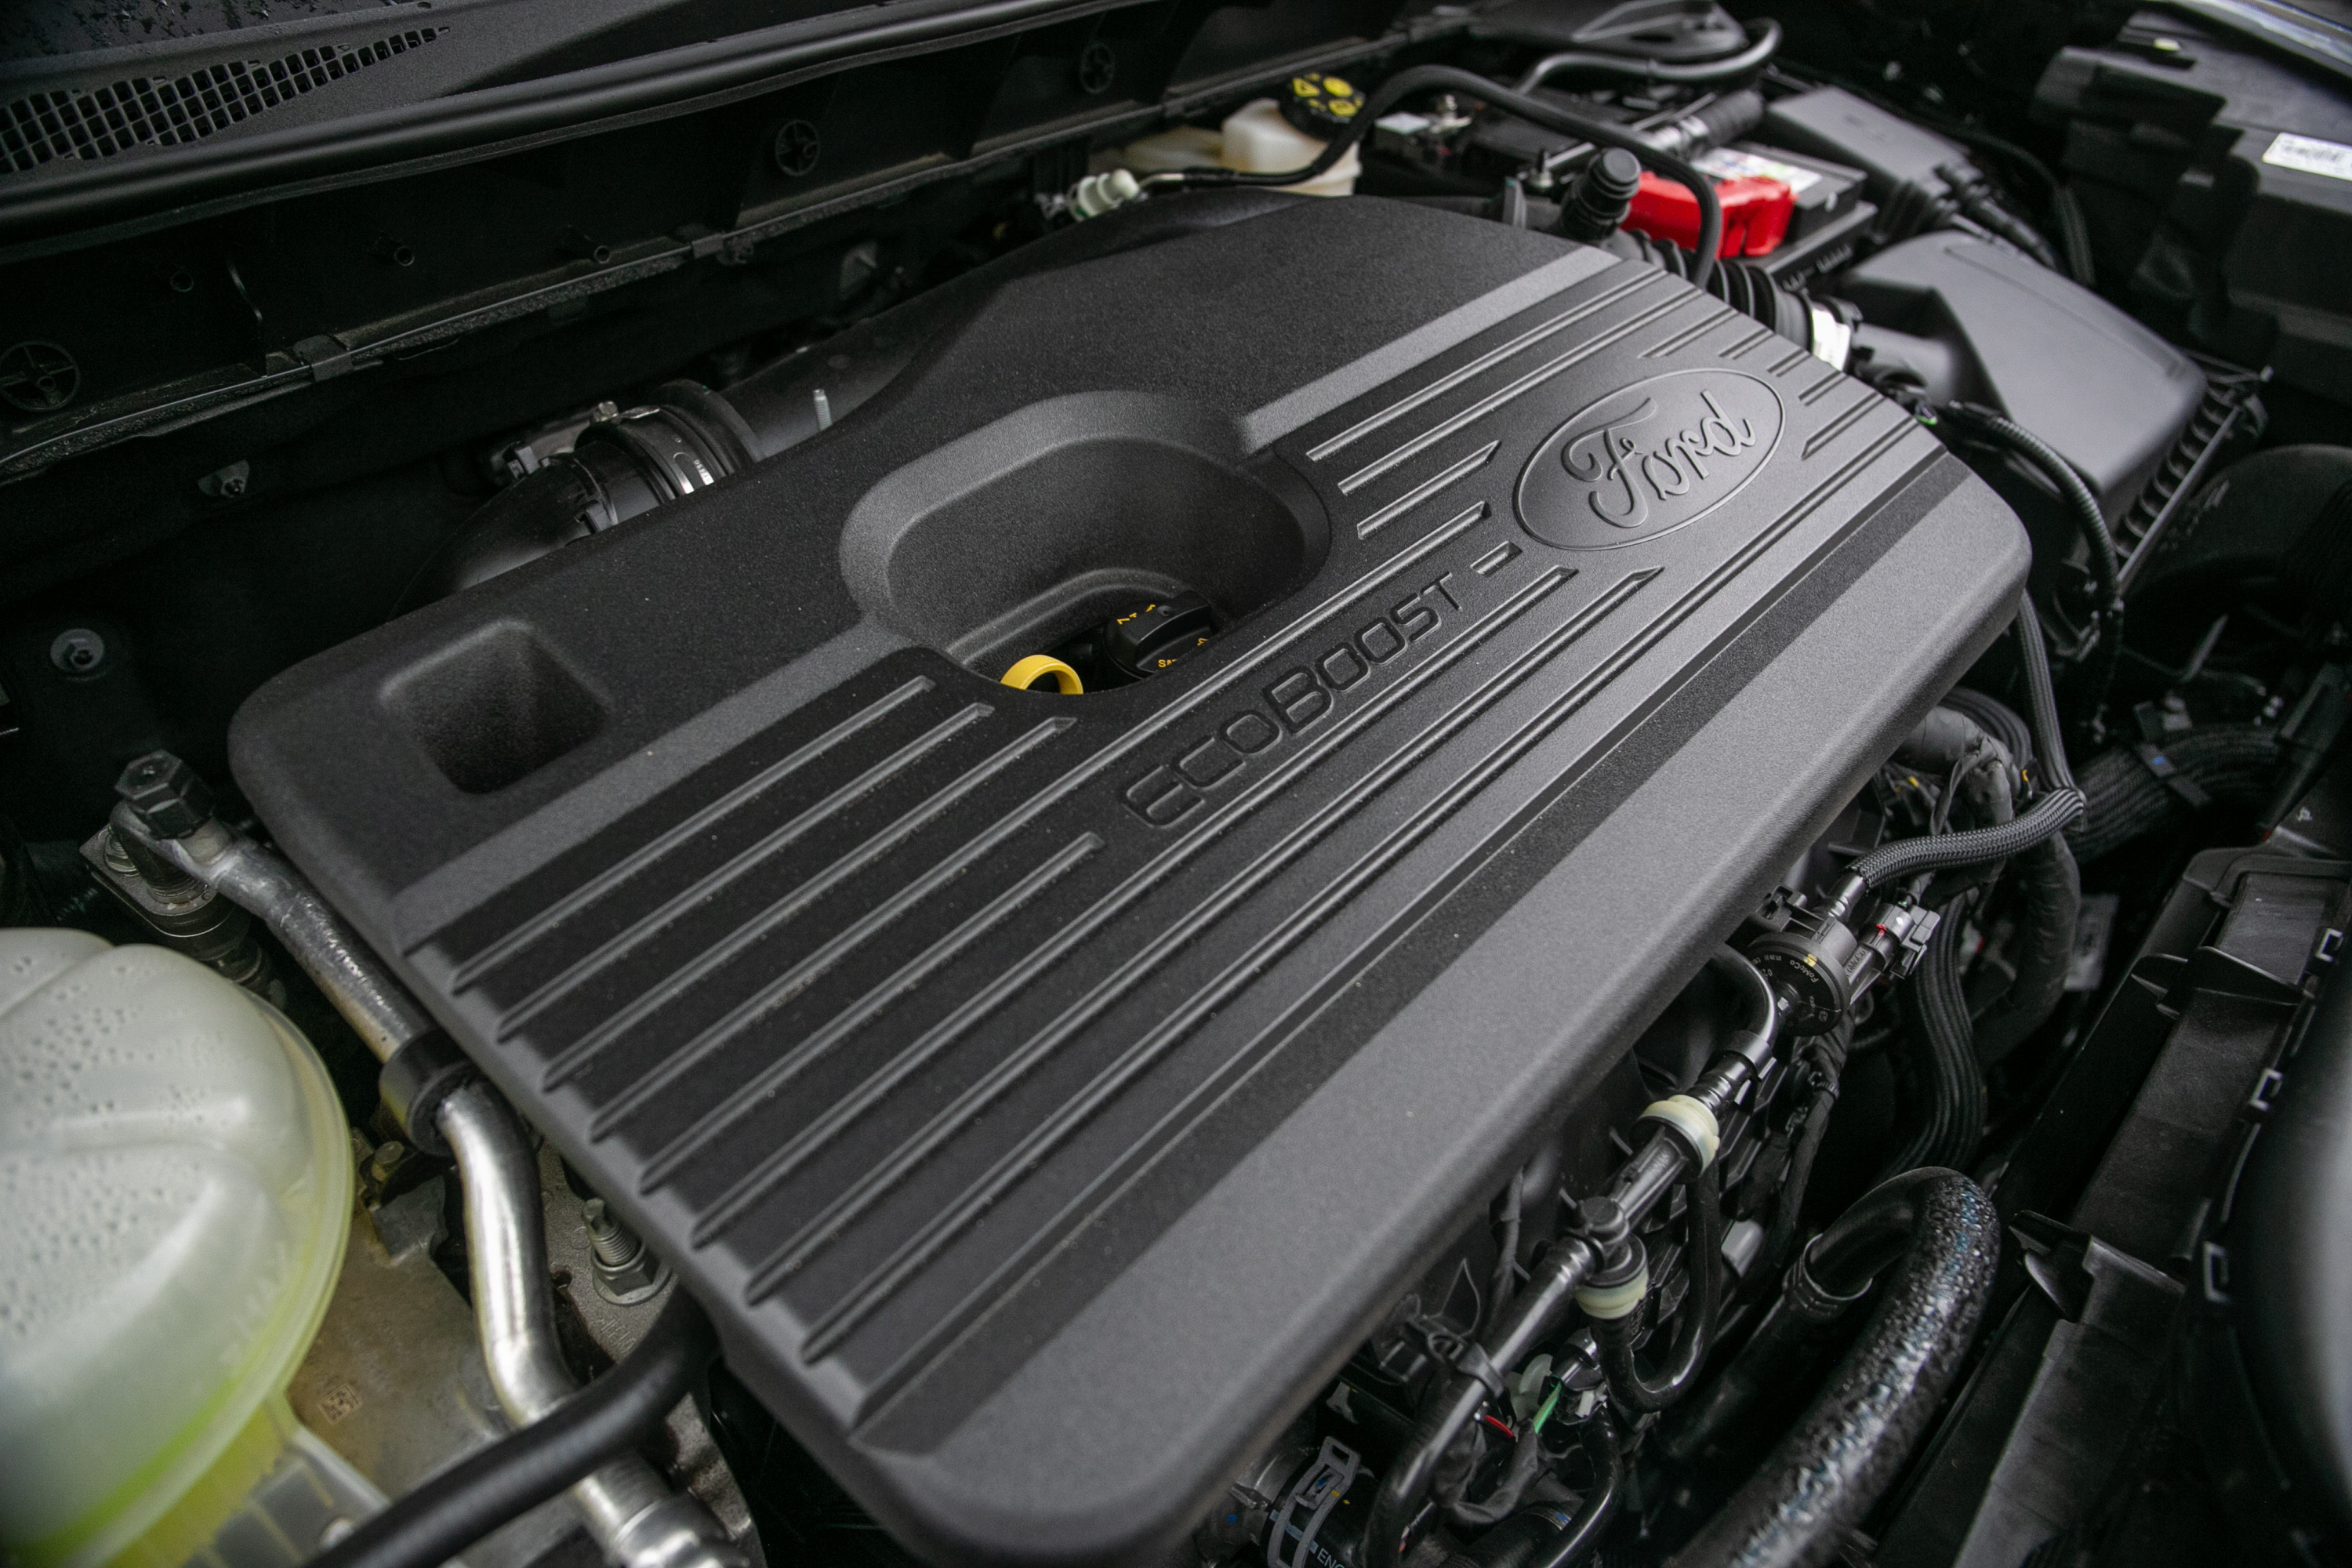 Kuga Ecoboost 250 AWD ST-Line X 搭載 2.0 升雙渦流渦輪增壓汽油引擎，具備 250ps / 5500rpm 最大馬力與 38.7kgm / 3000rpm 最大扭力輸出。